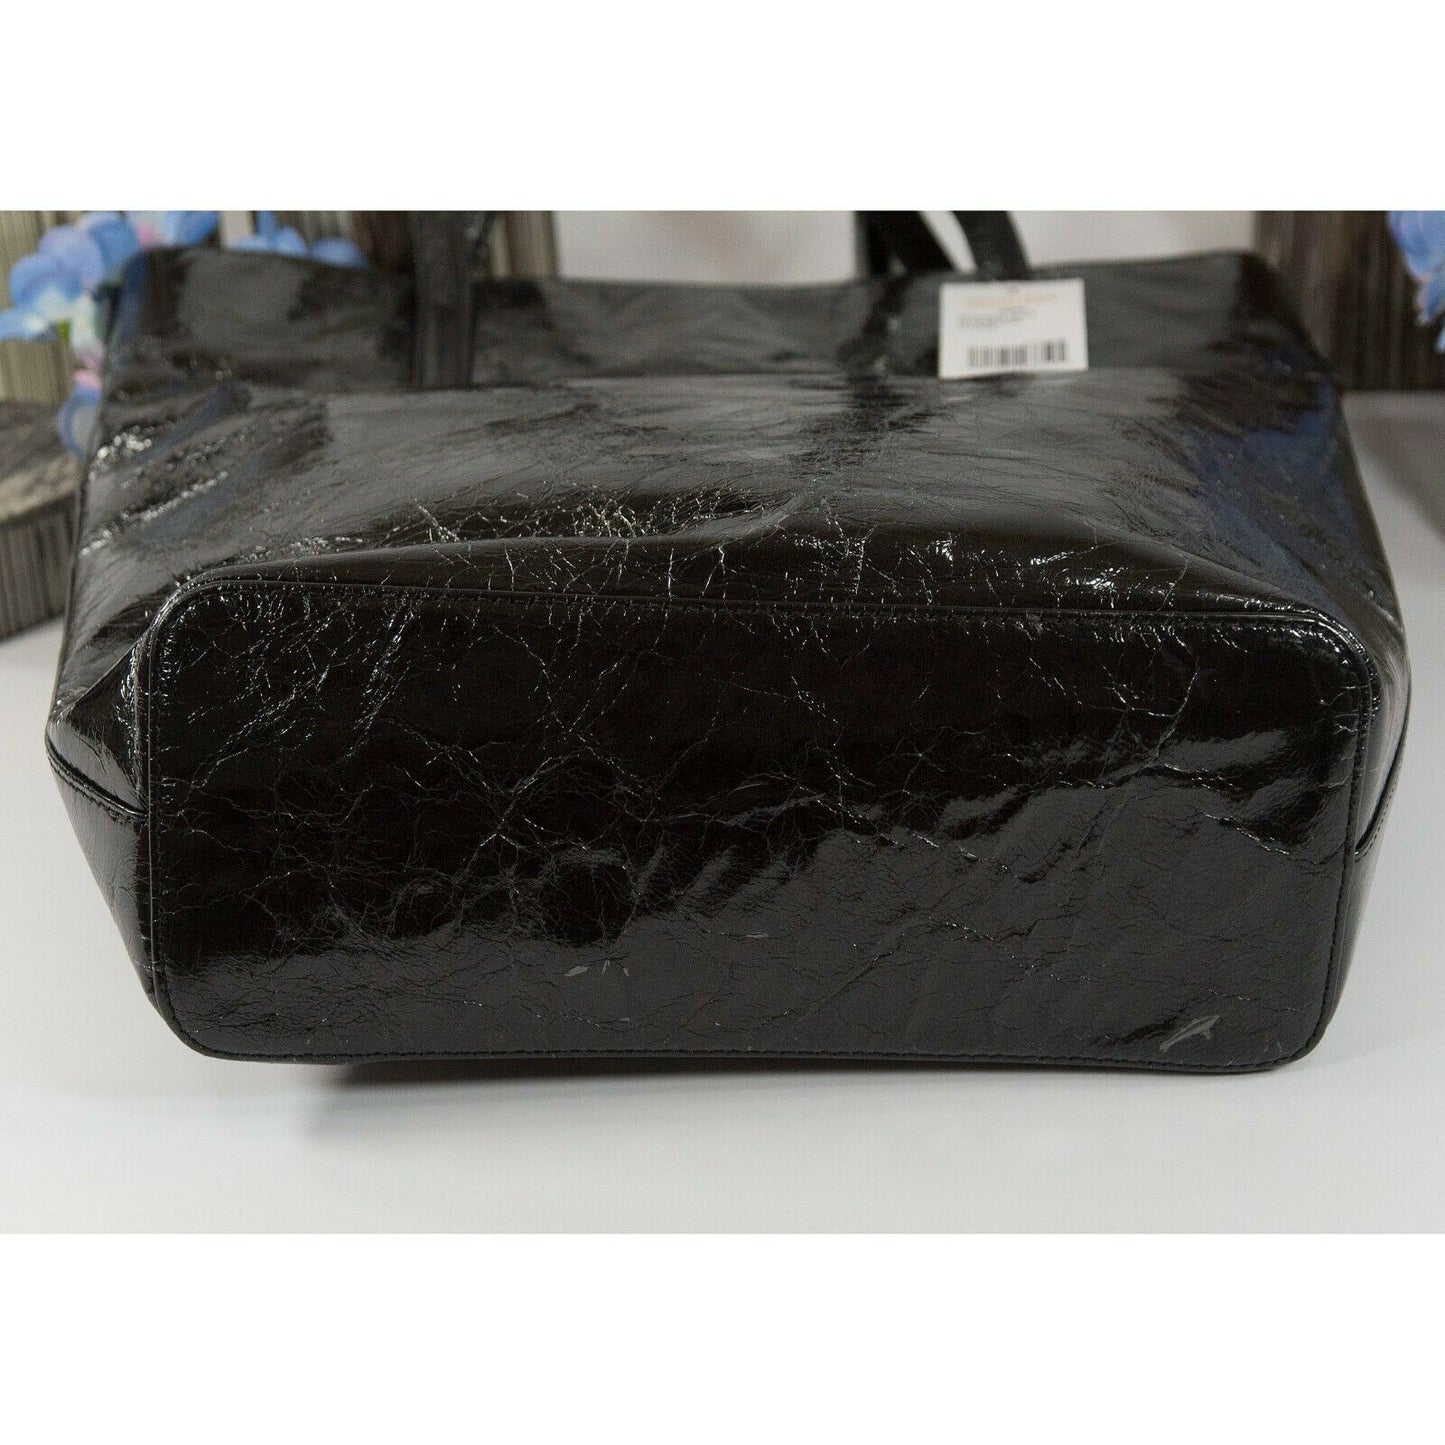 Michael Kors Emry Black Crinkled Leather Large Tote Bag NWT